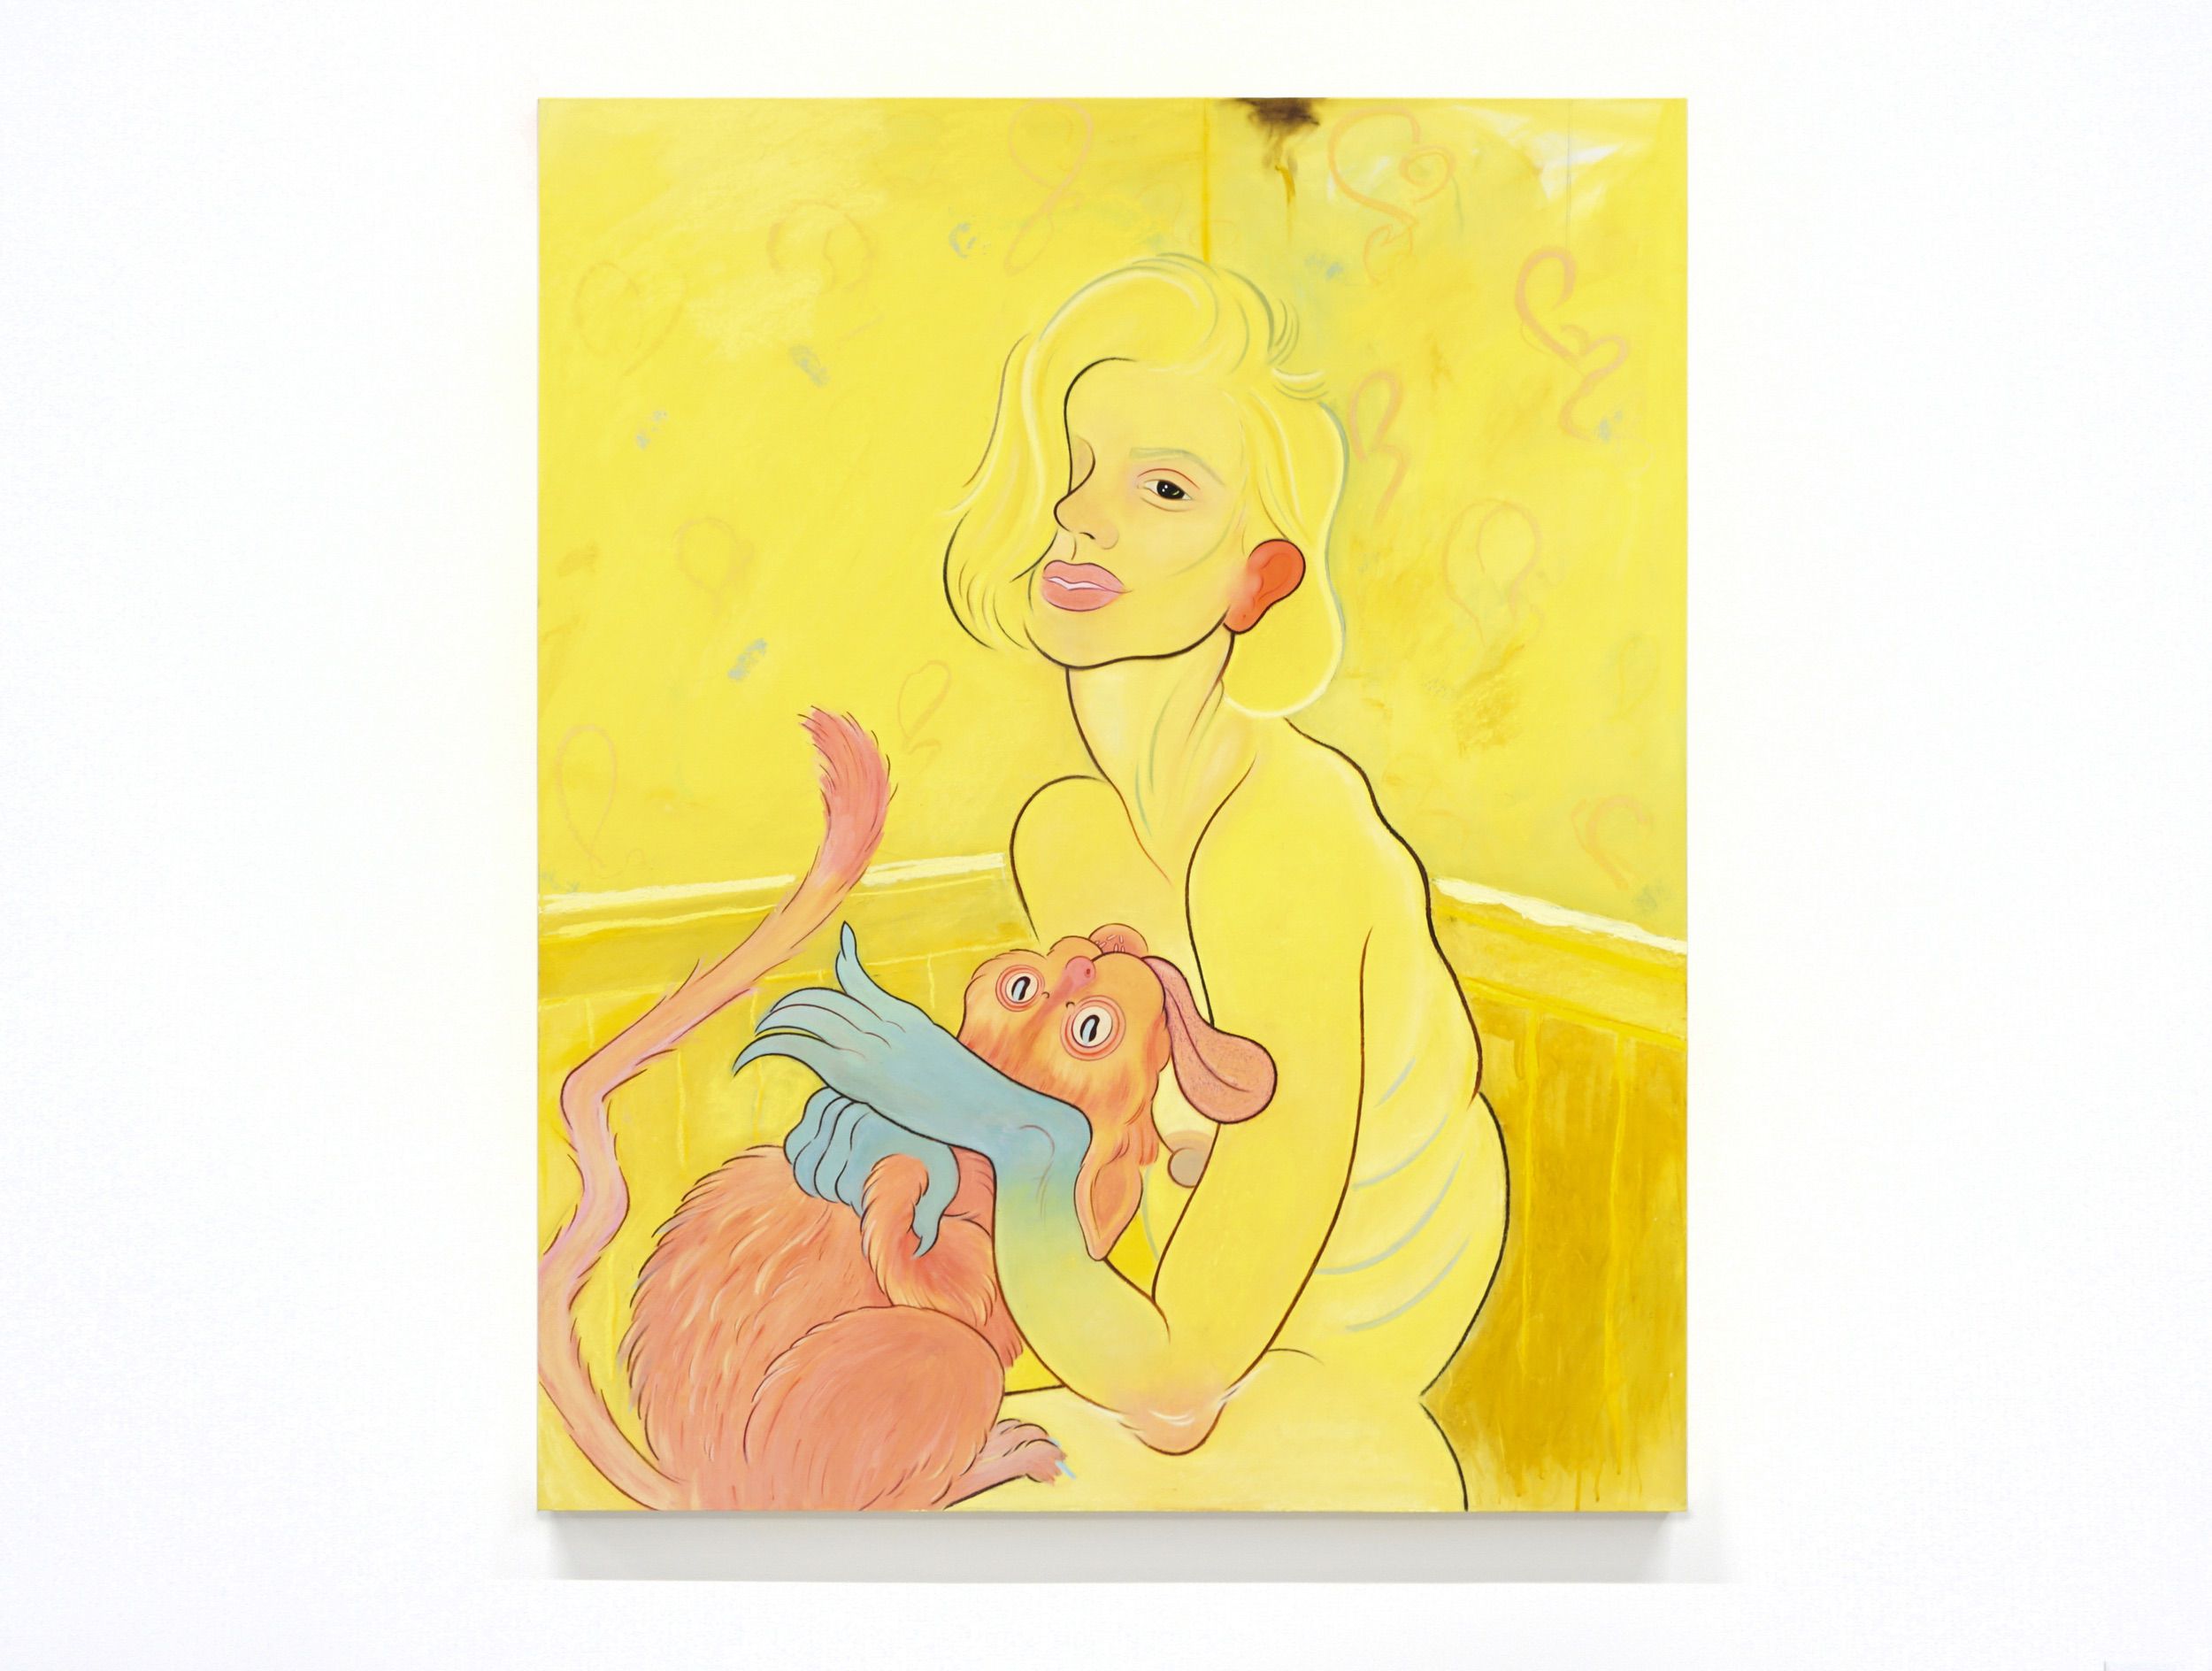  Koak  Blonde , 2016 Pigment, graphite, chalk, and milk casein on rag paper mounted on panel 60 x 48 inches 